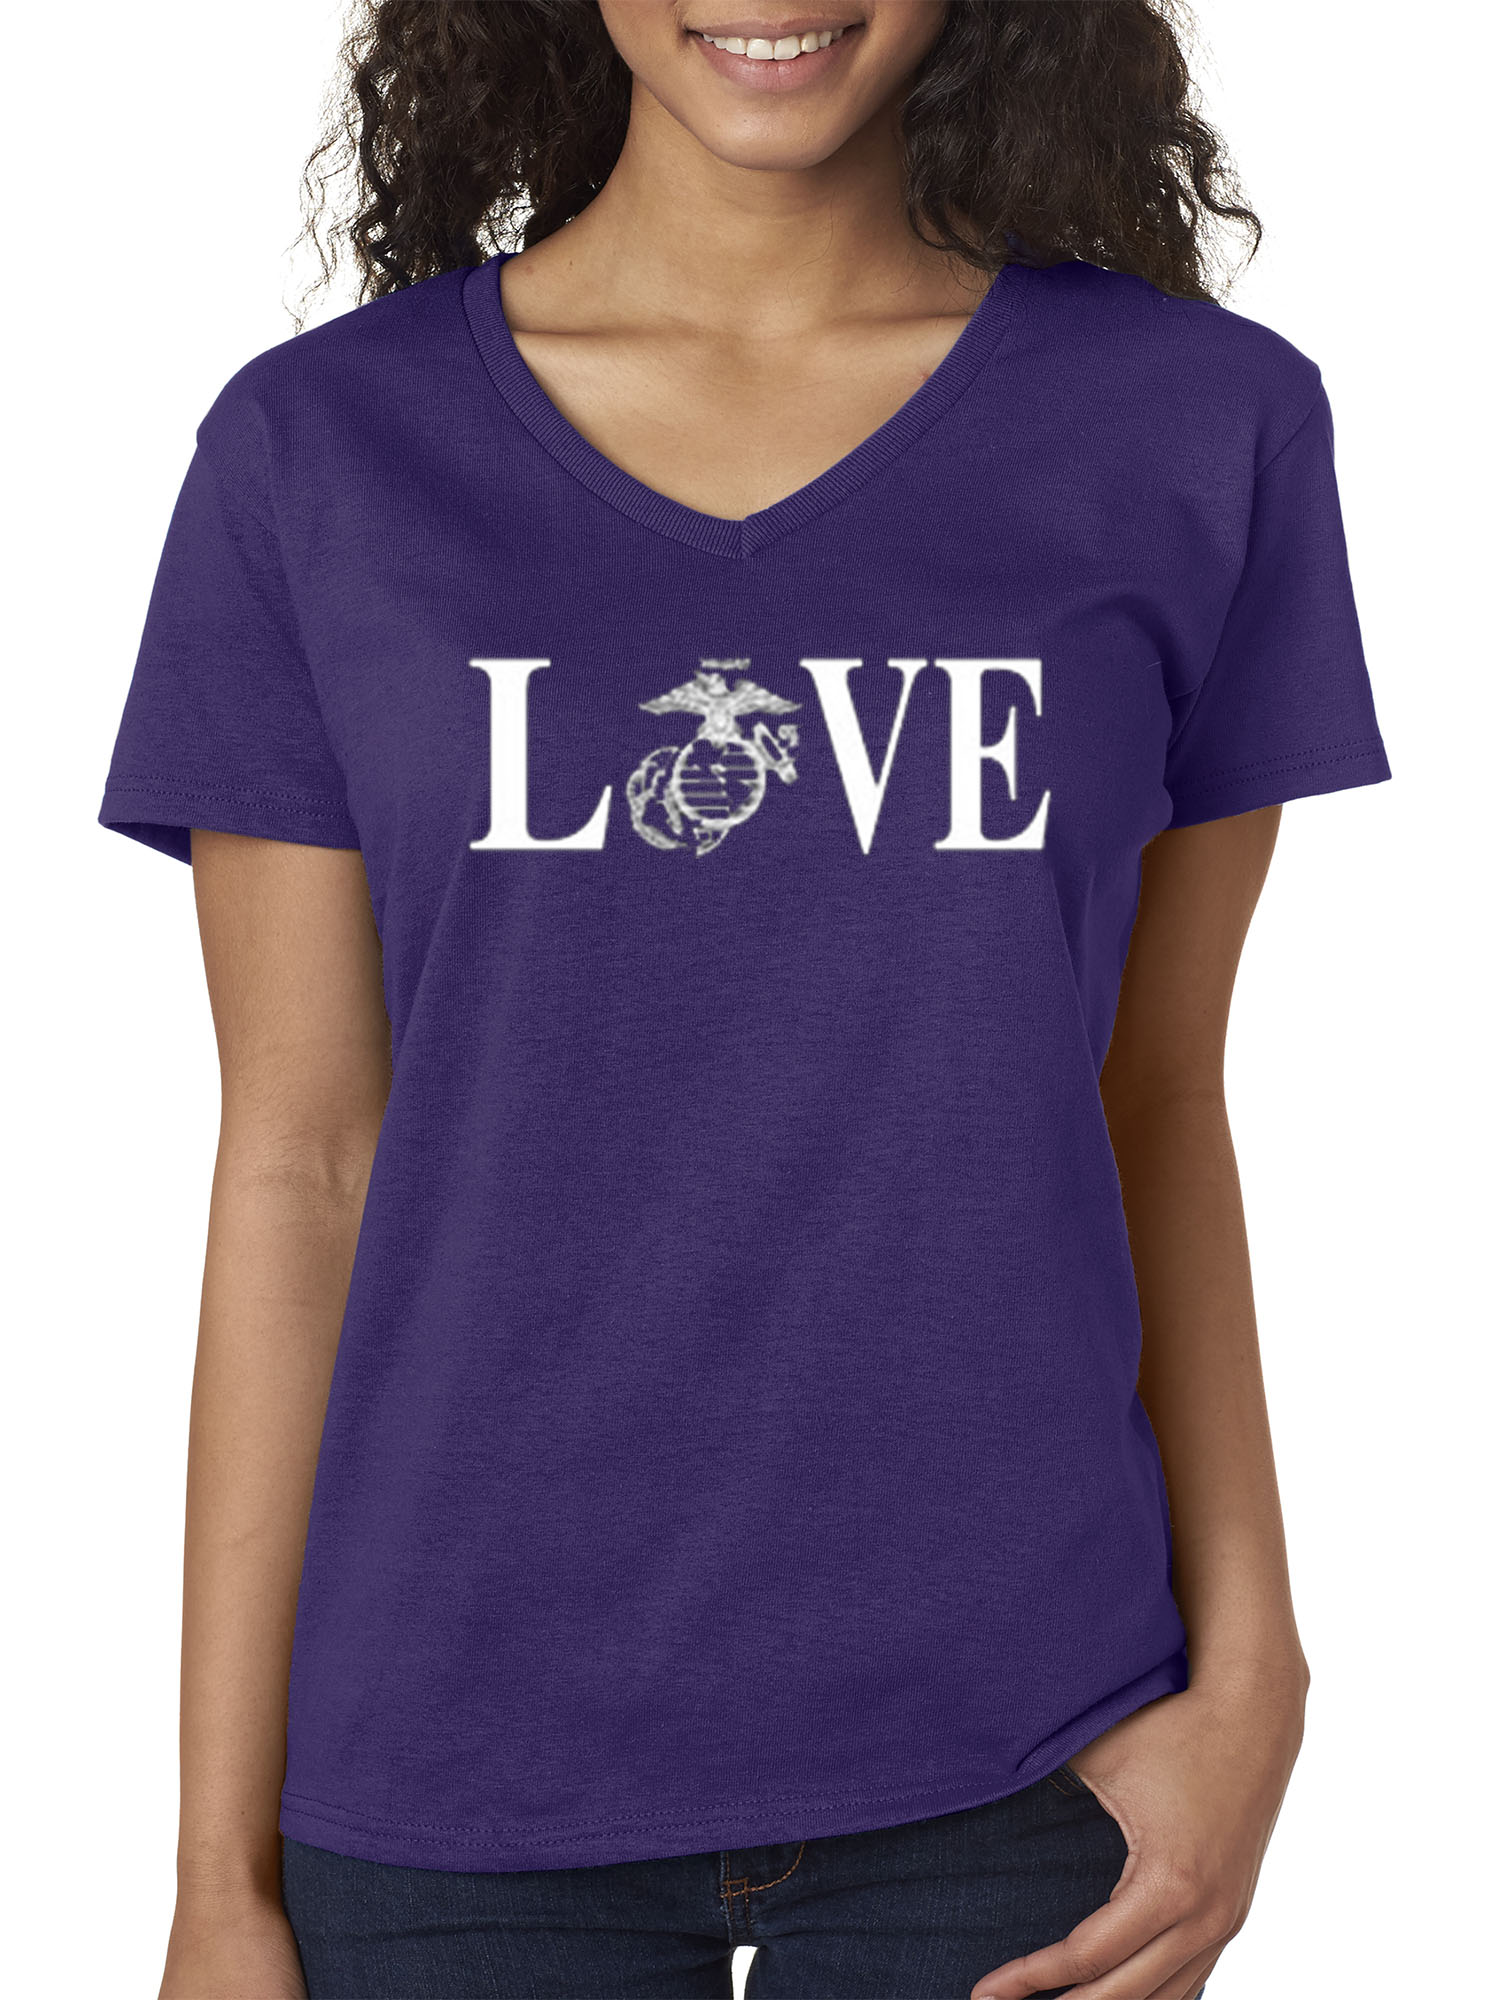 New Way 145 - Women's V-Neck T-Shirt Love Marines USMC Military USA Small Purple